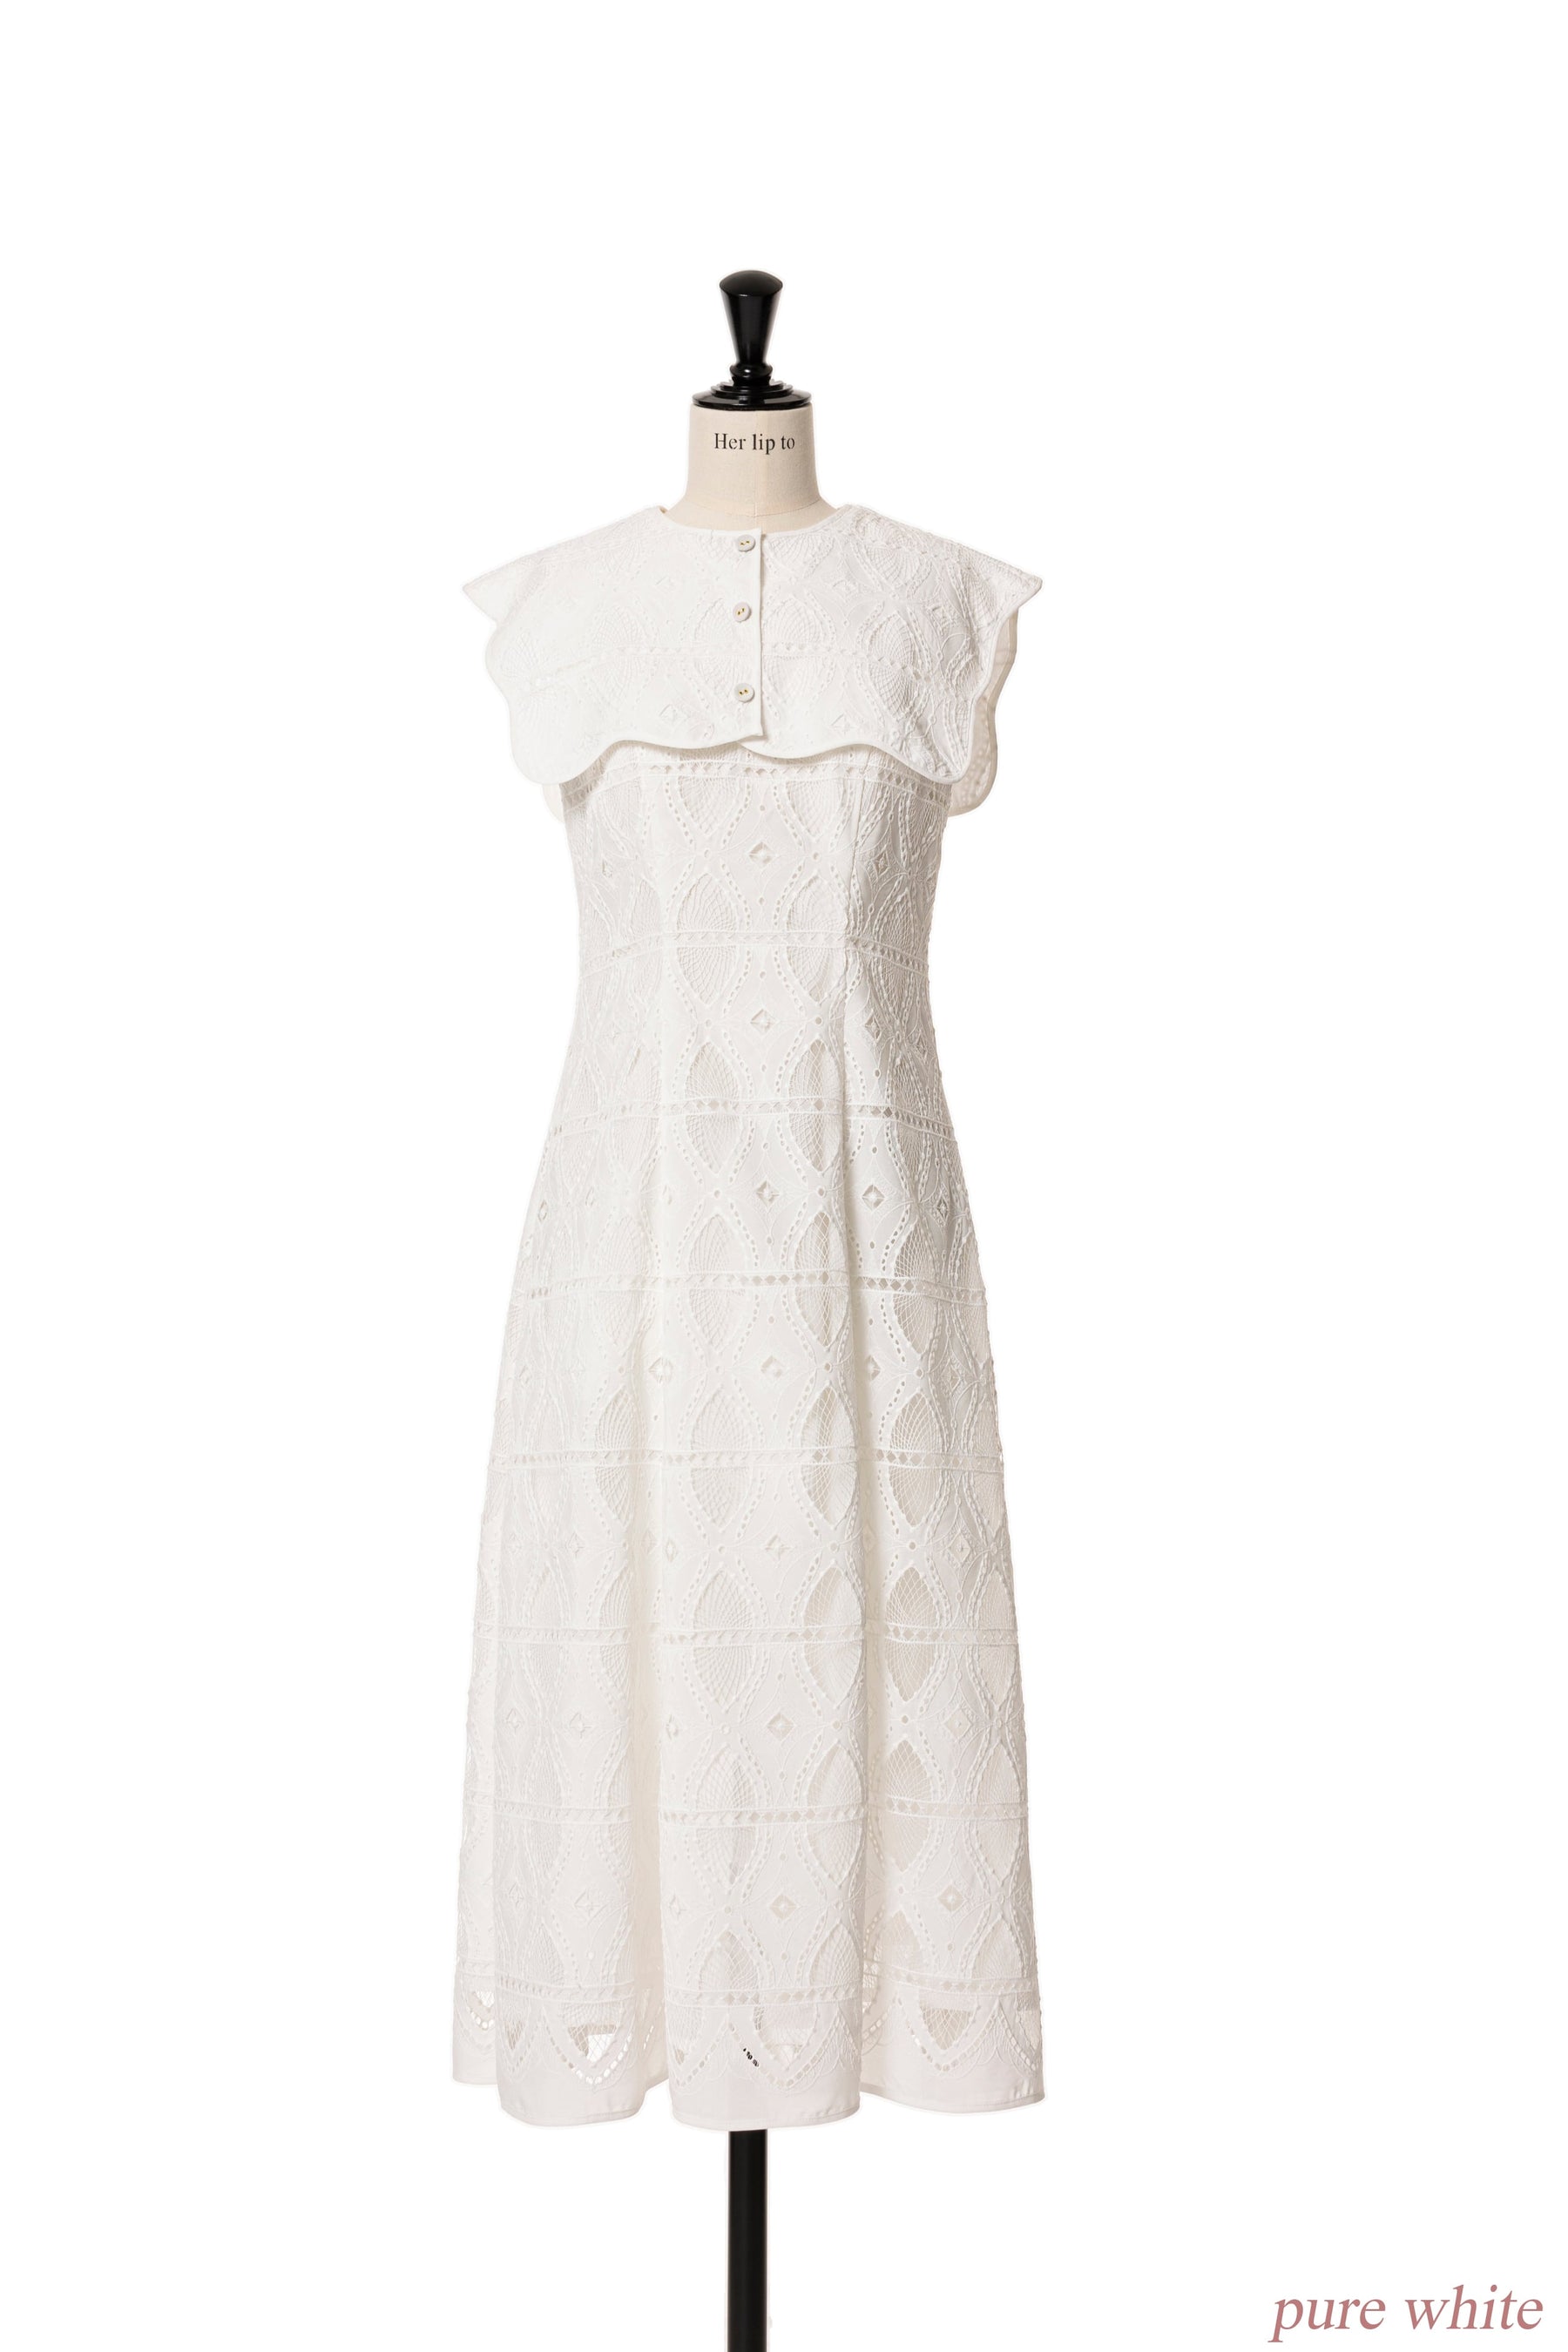 ST.JOHN  総レースドレス  Chantilly Lace Dress